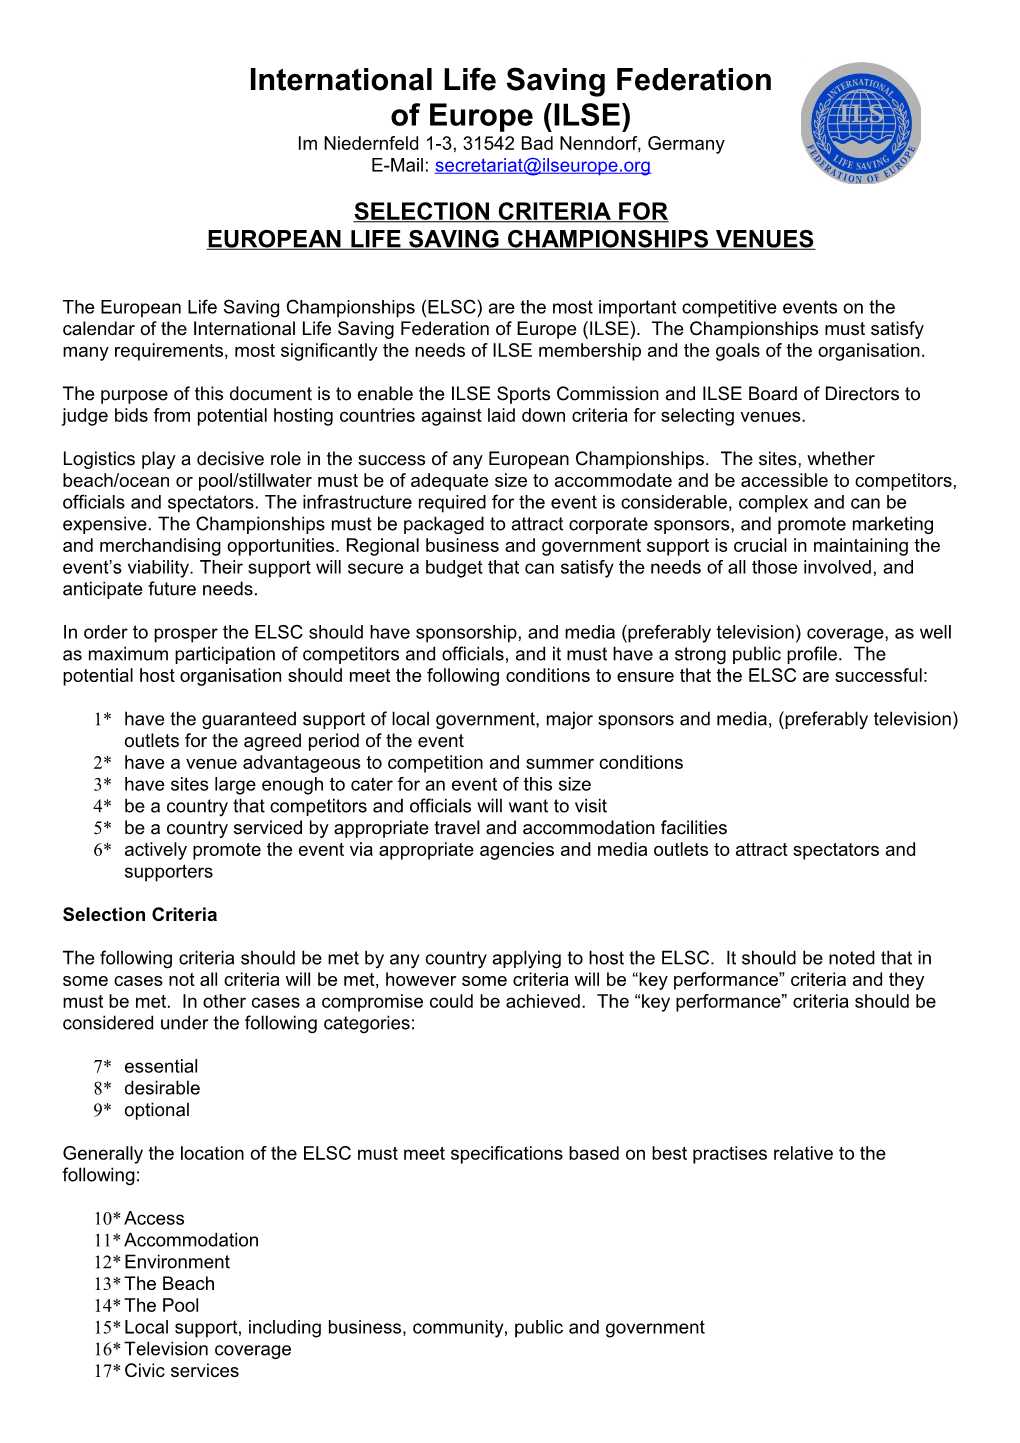 European Life Saving Championships Venues